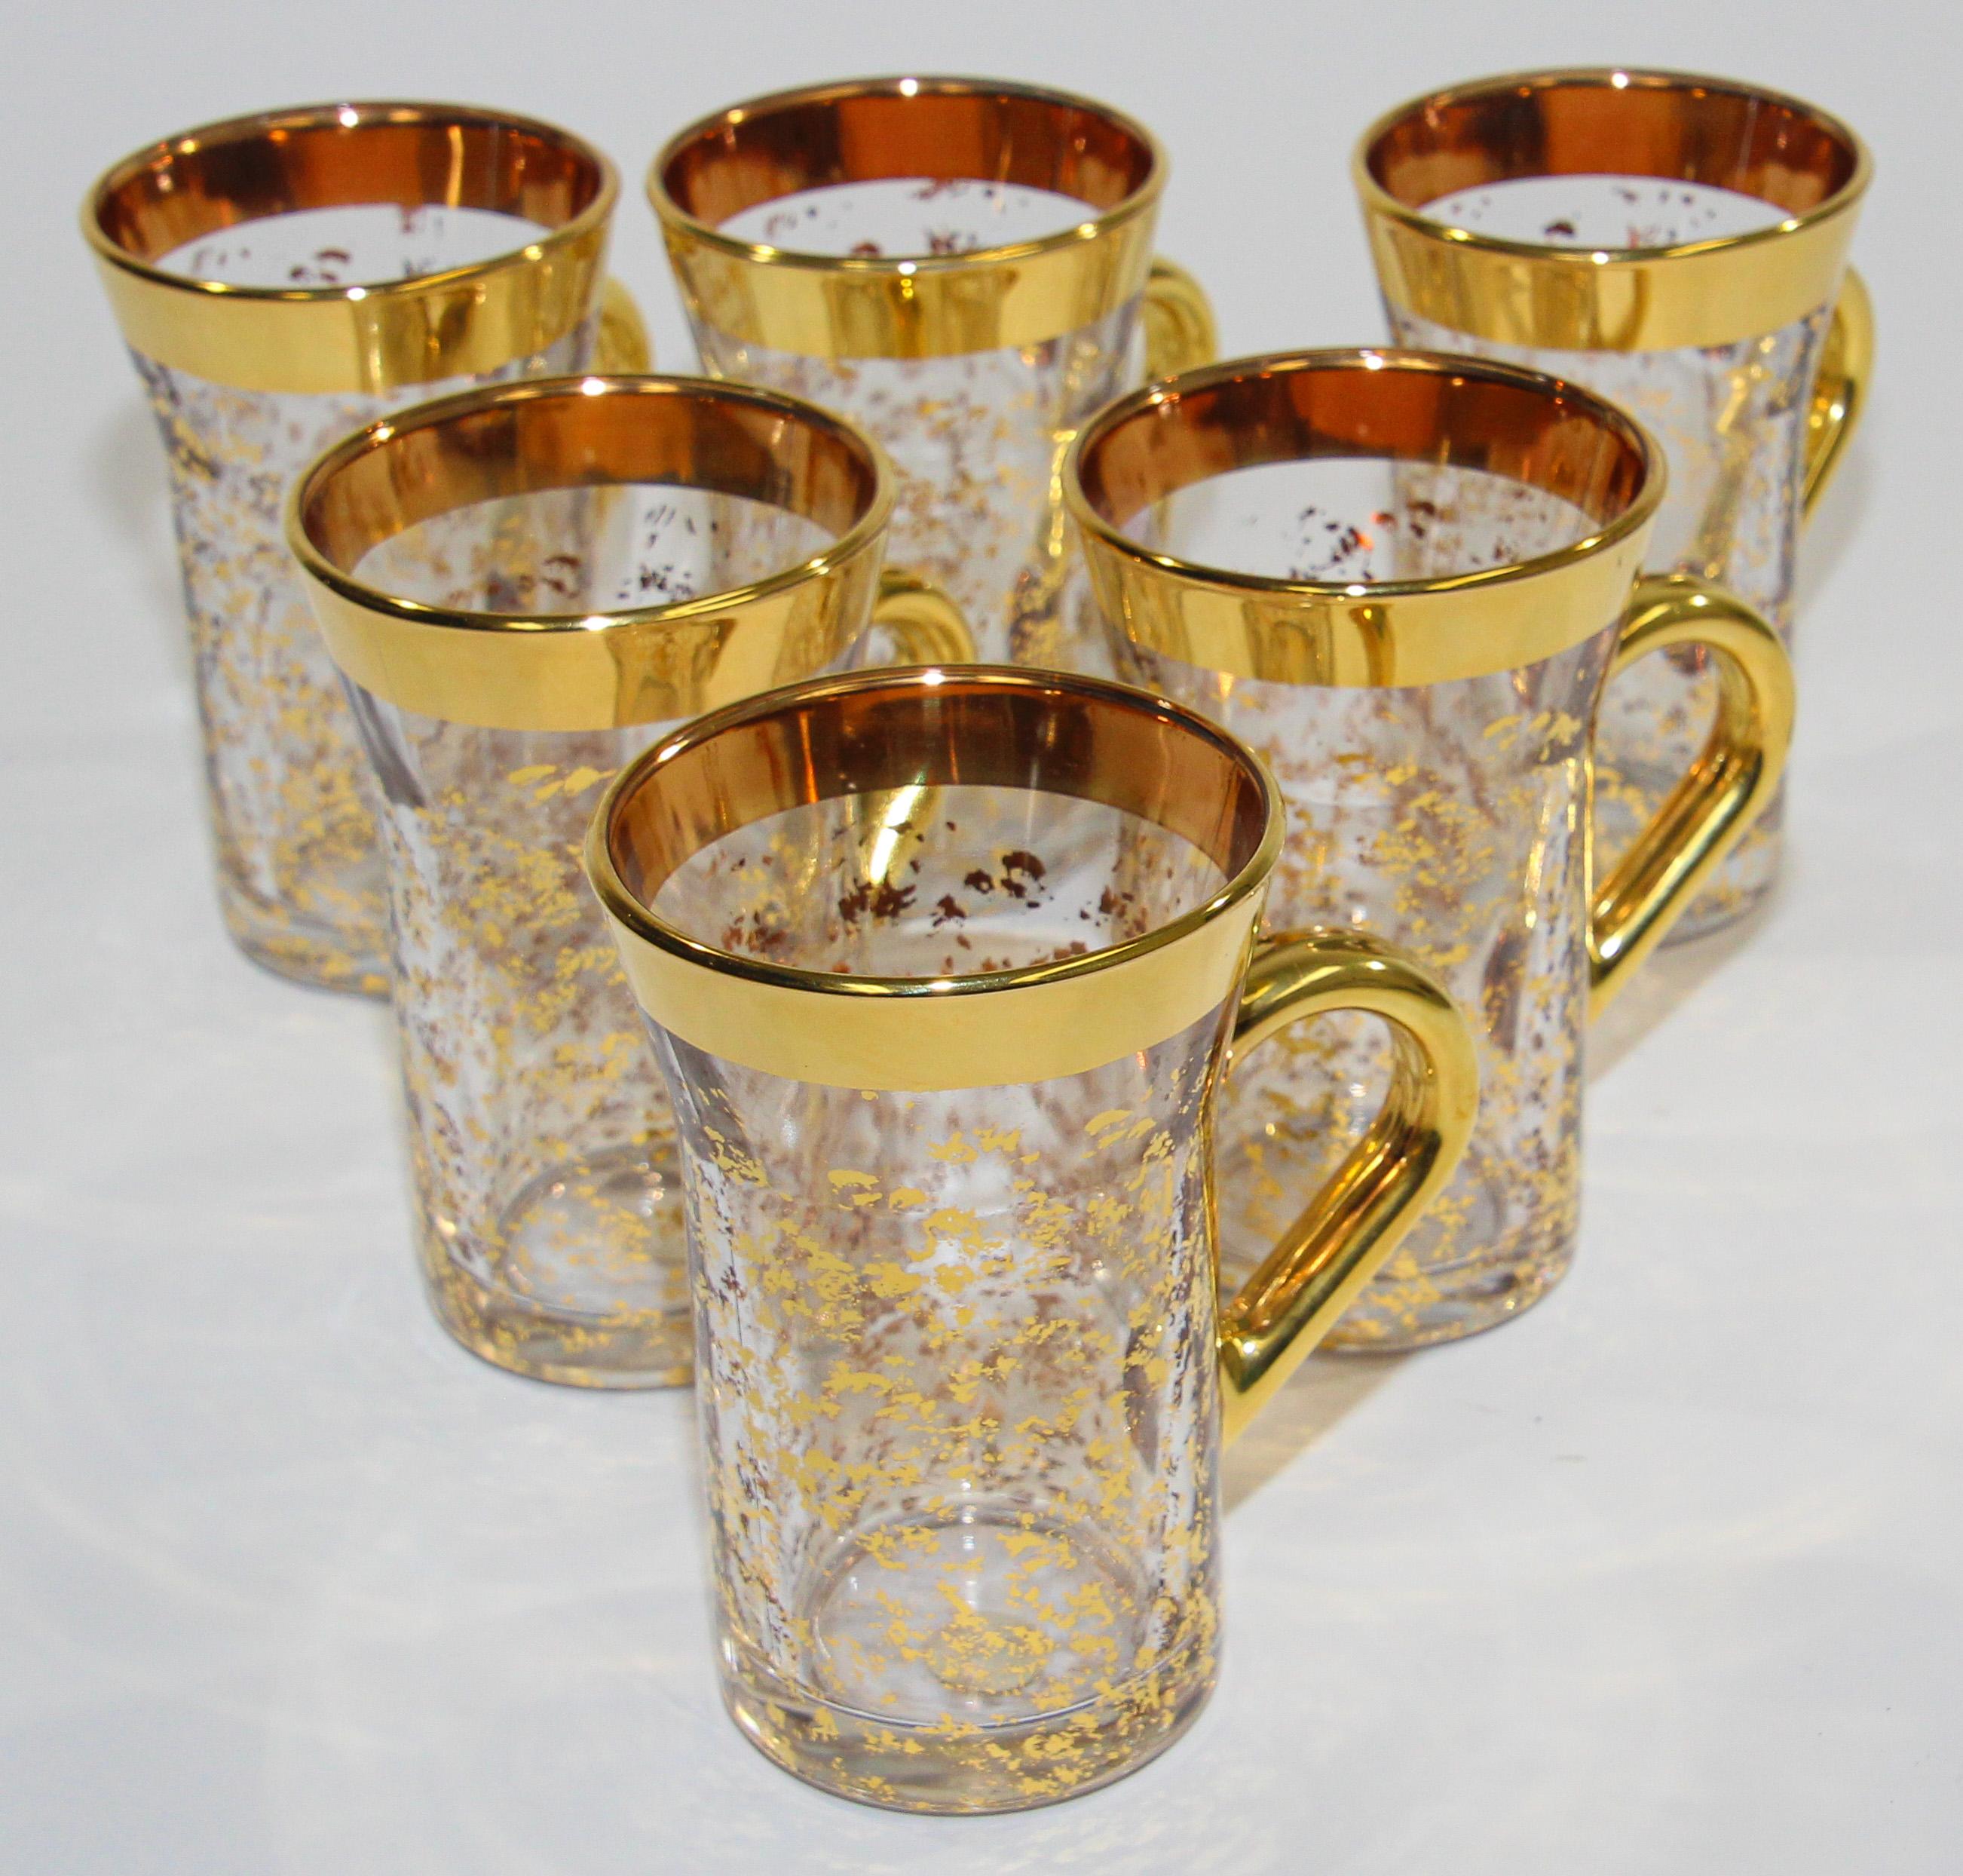 Vintage Lavorato a Mano Italian Handled Barware Glasses Set of 6 3